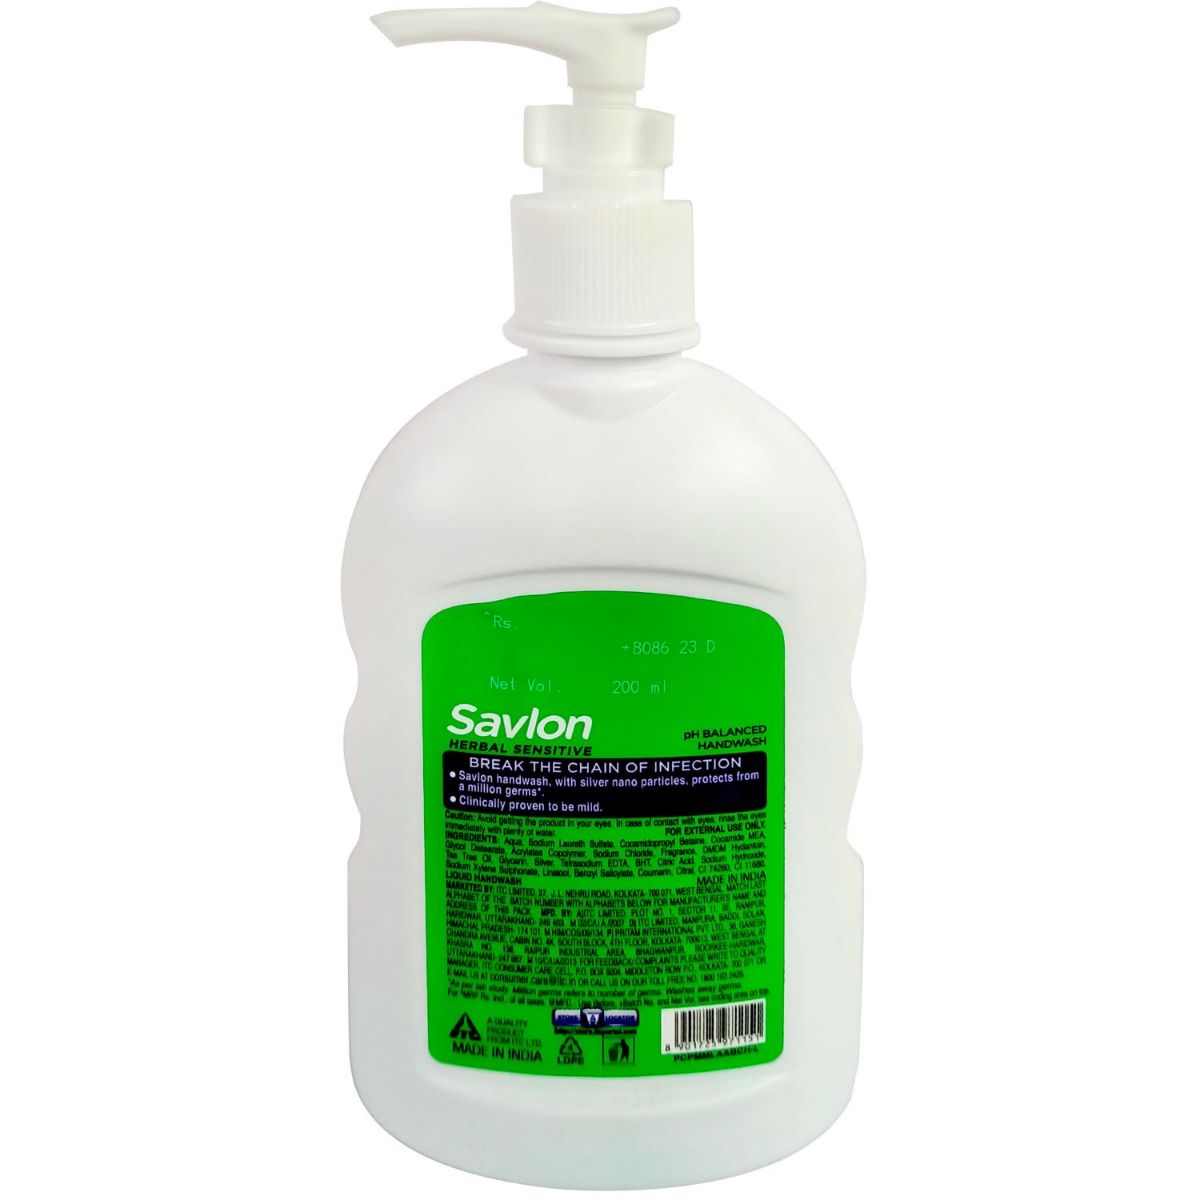 Savlon Herbal Sensitive Germ Protection Handwash, 200 ml, Pack of 1 